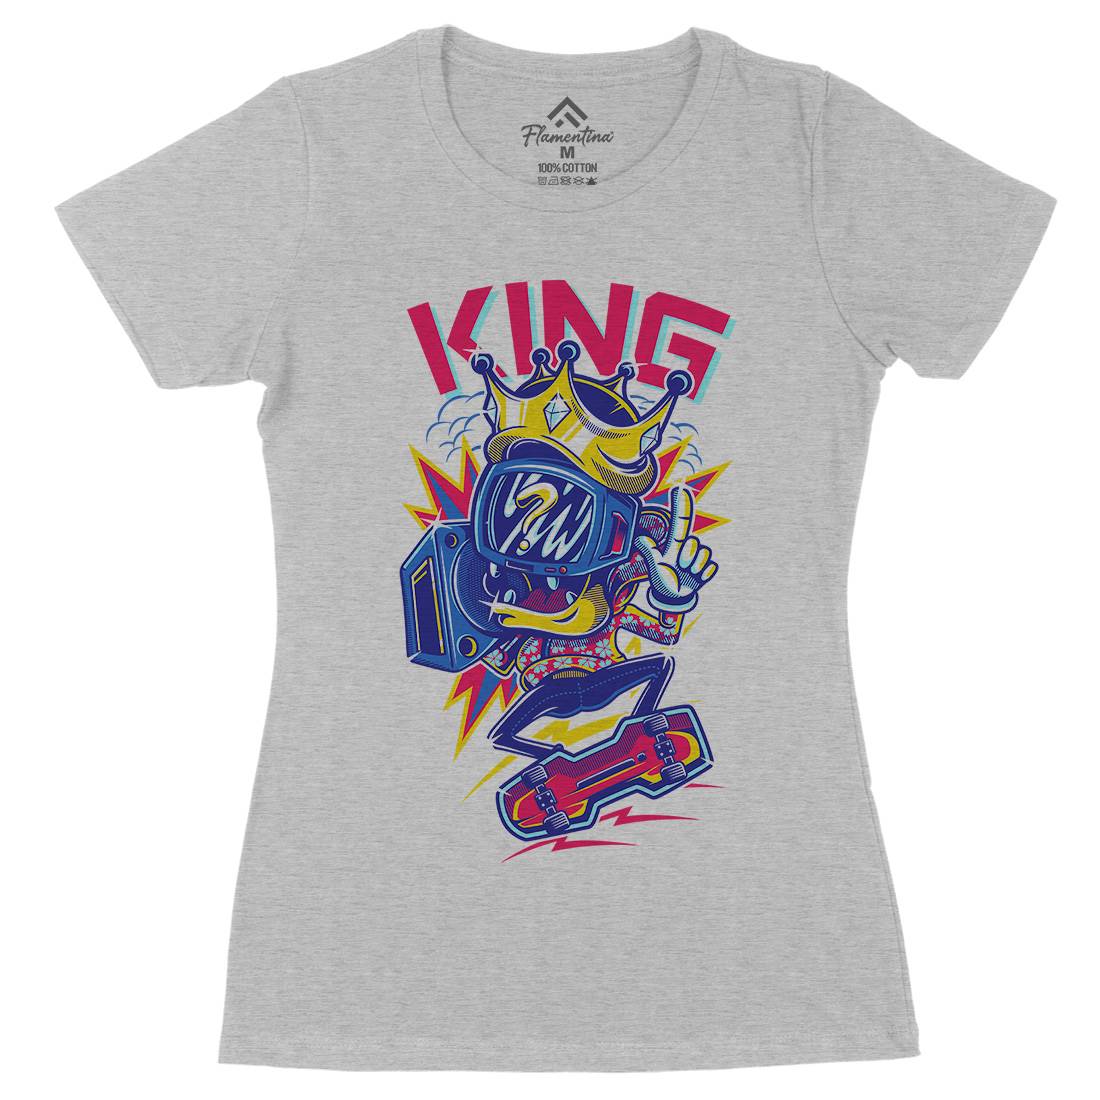 King Womens Organic Crew Neck T-Shirt Skate D630